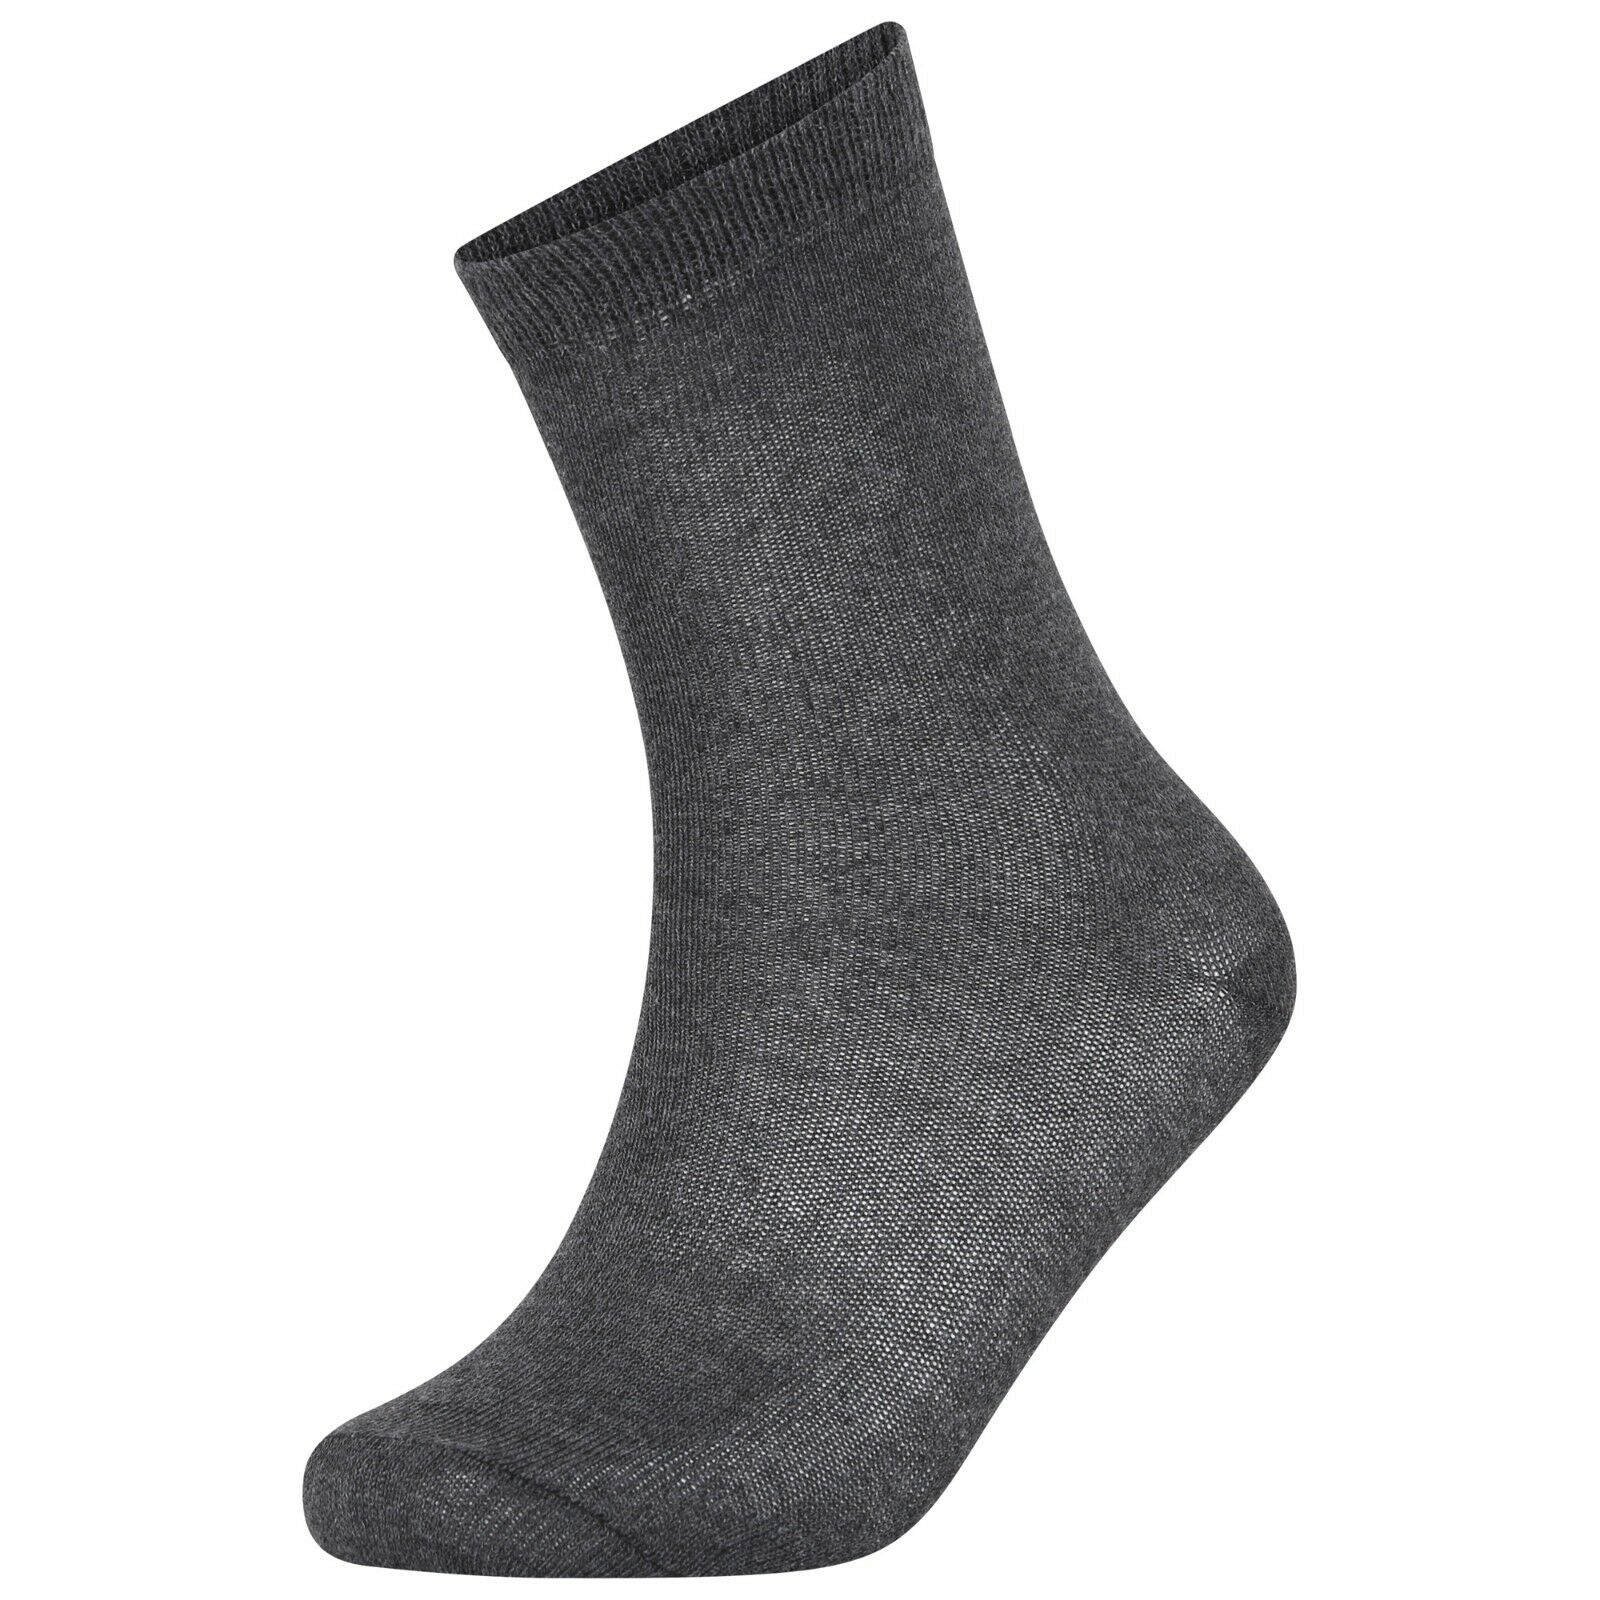 6 Pairs Girls Boys Unisex  Grey, Charcoal Mix Ankle Socks Children's Kids Plain Cotton Back to School Socks